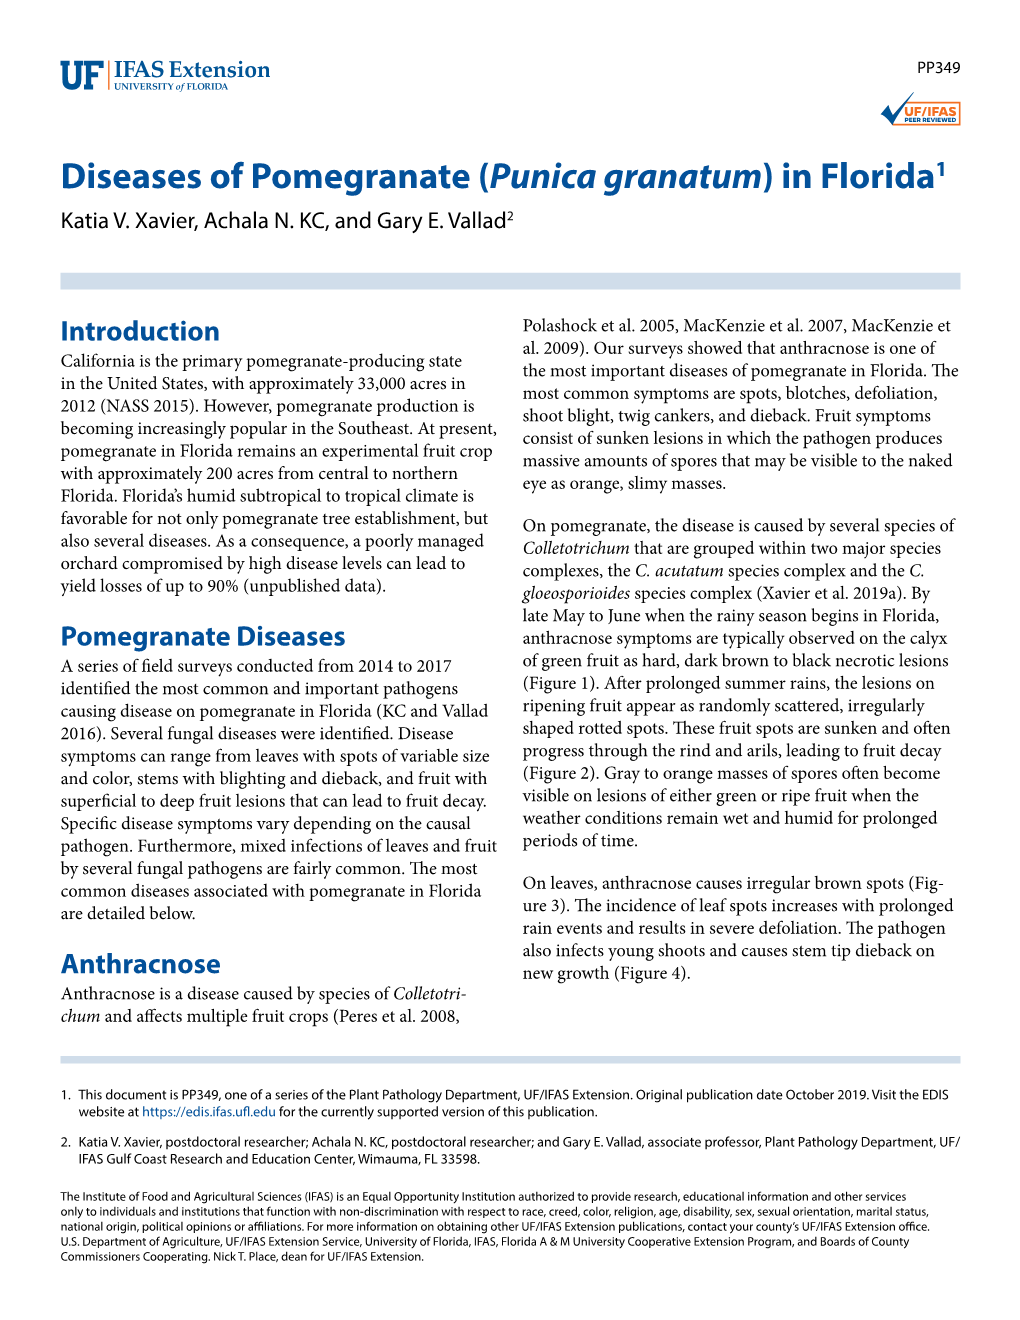 Diseases of Pomegranate (Punica Granatum) in Florida1 Katia V